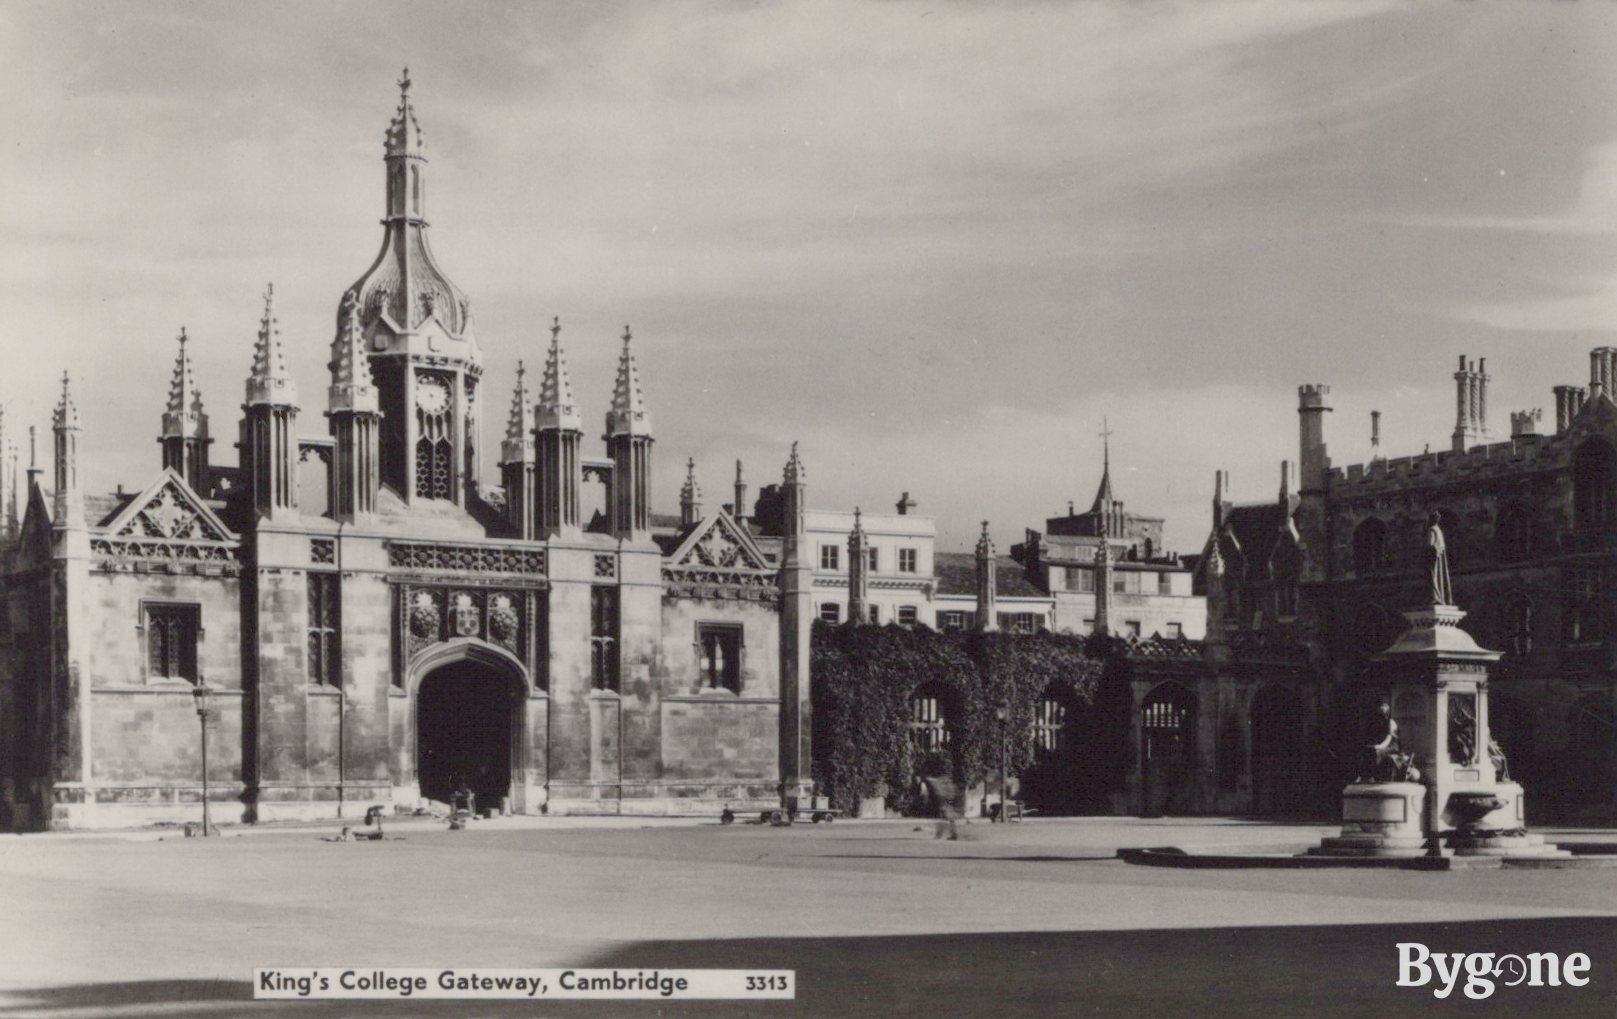 King's College Gateway, Cambridge